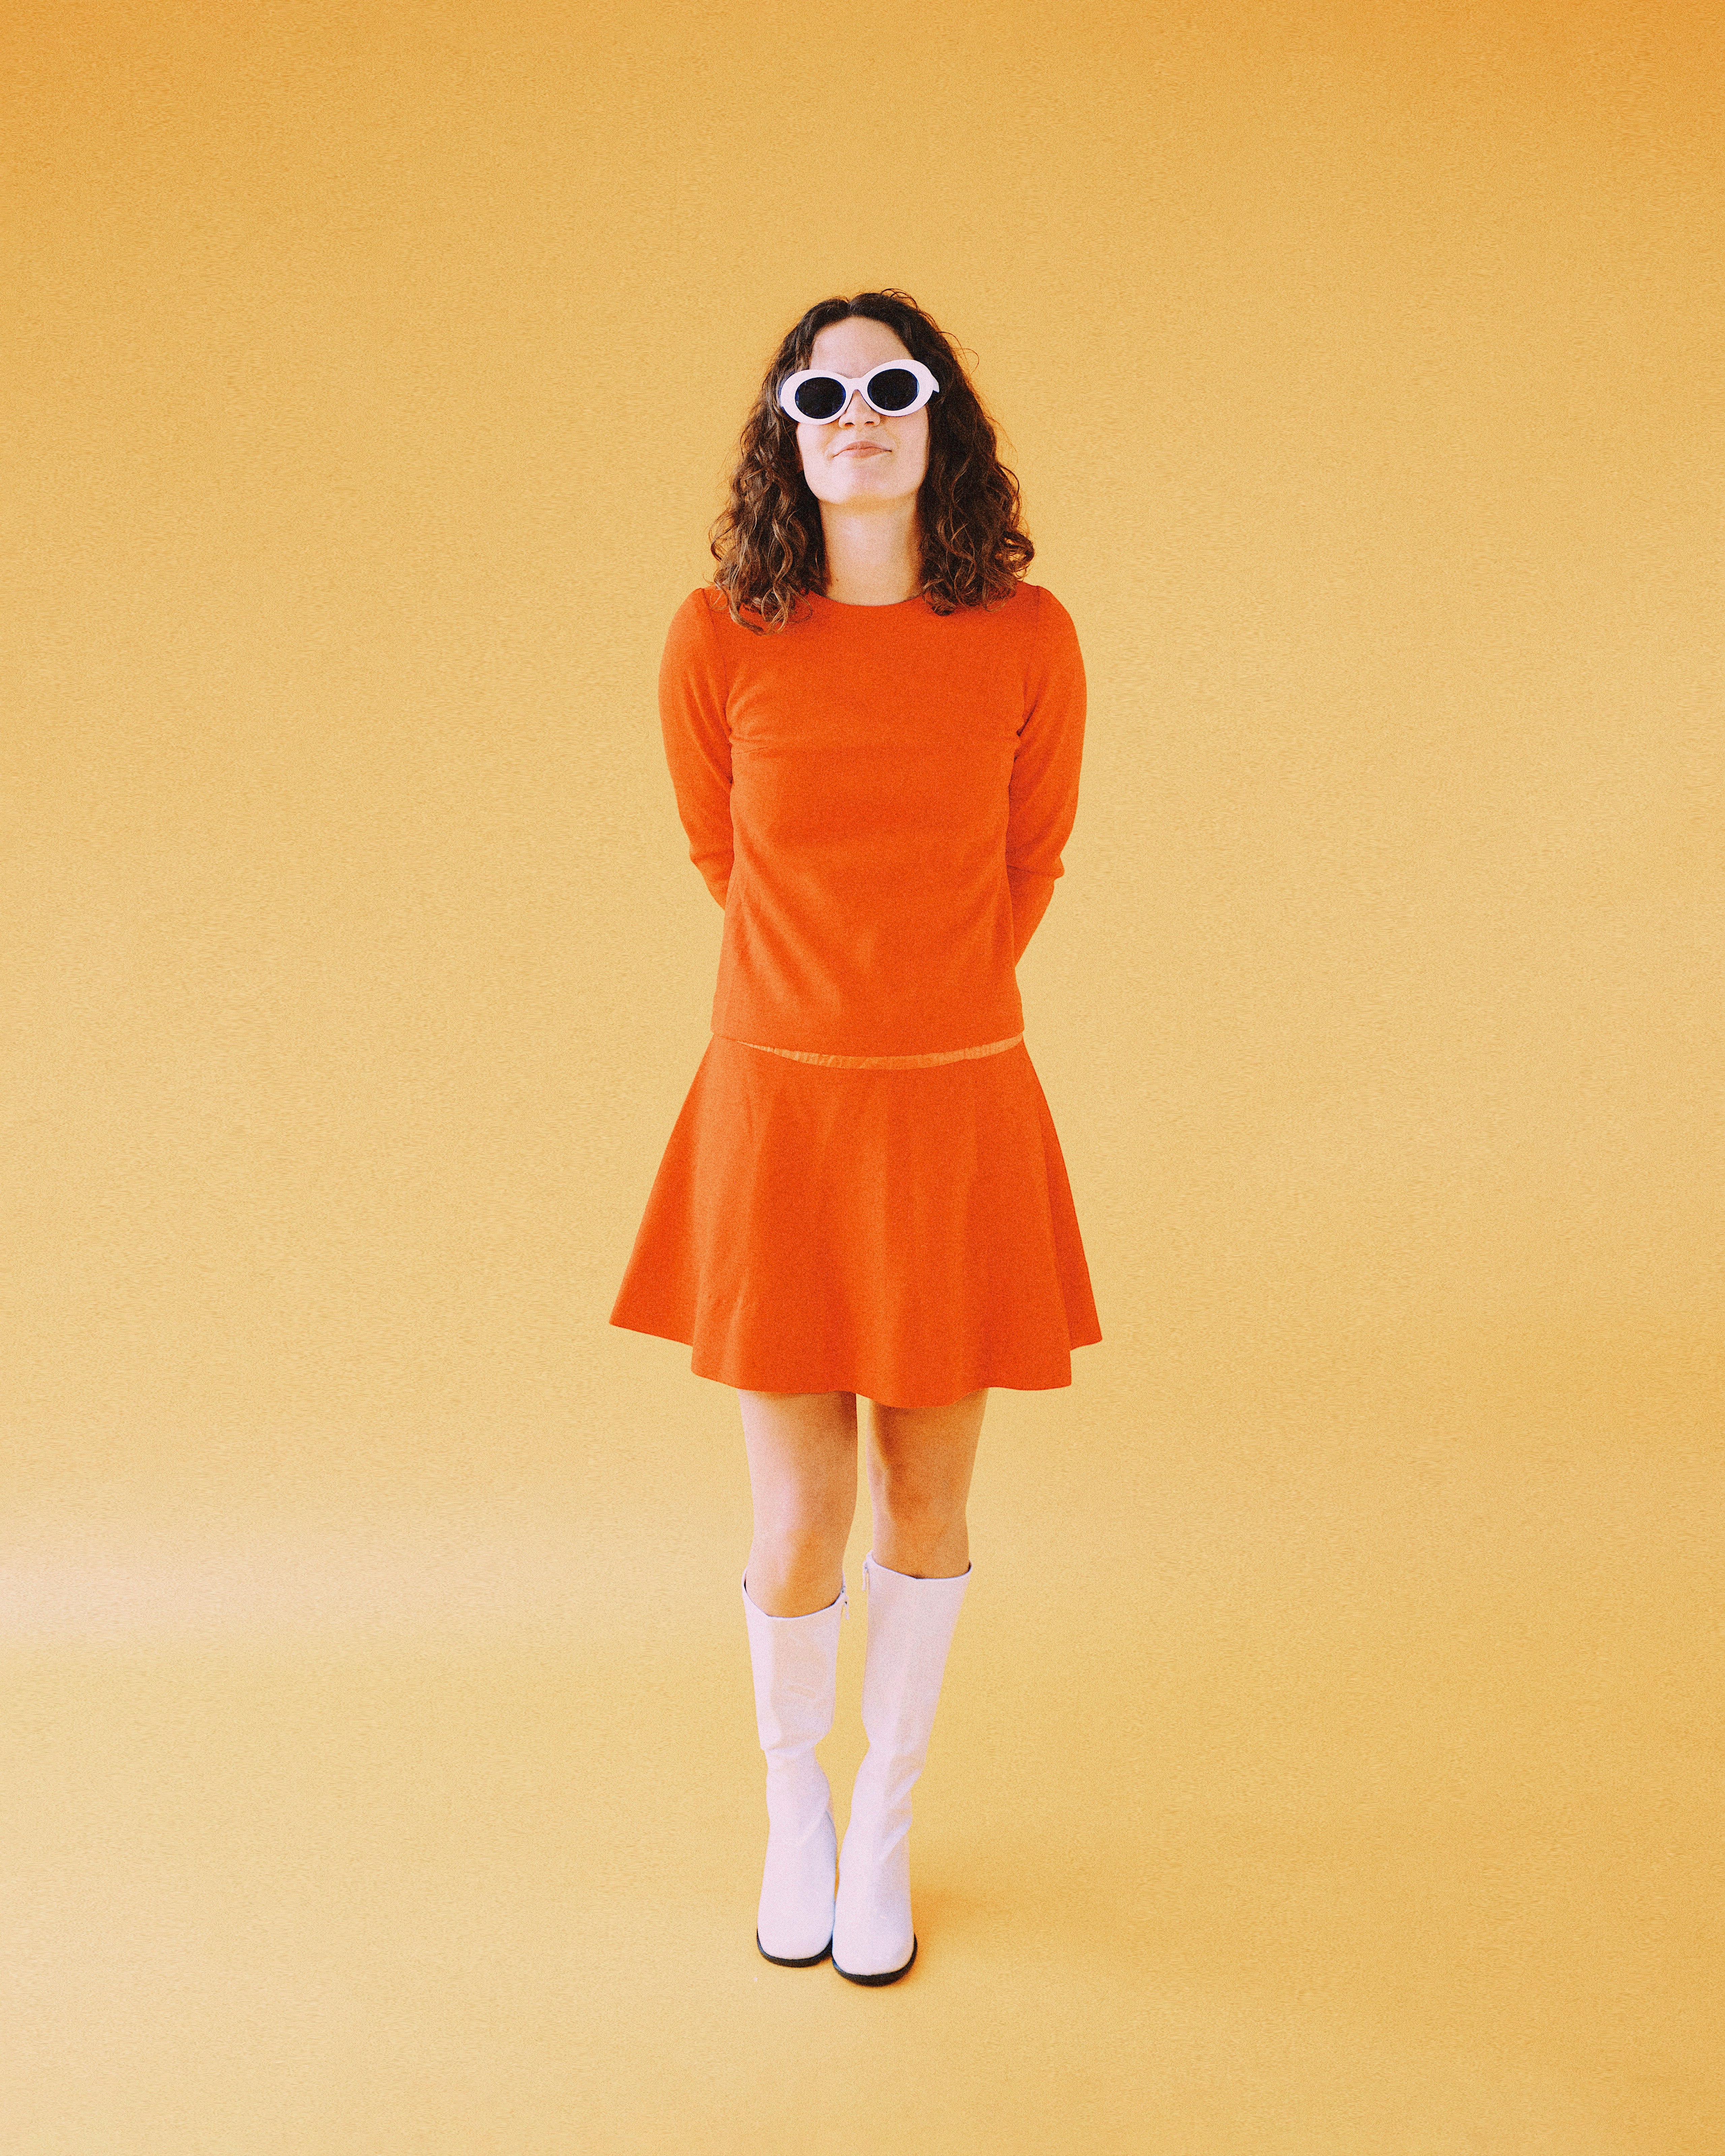 woman wearing orange long-sleeved dress